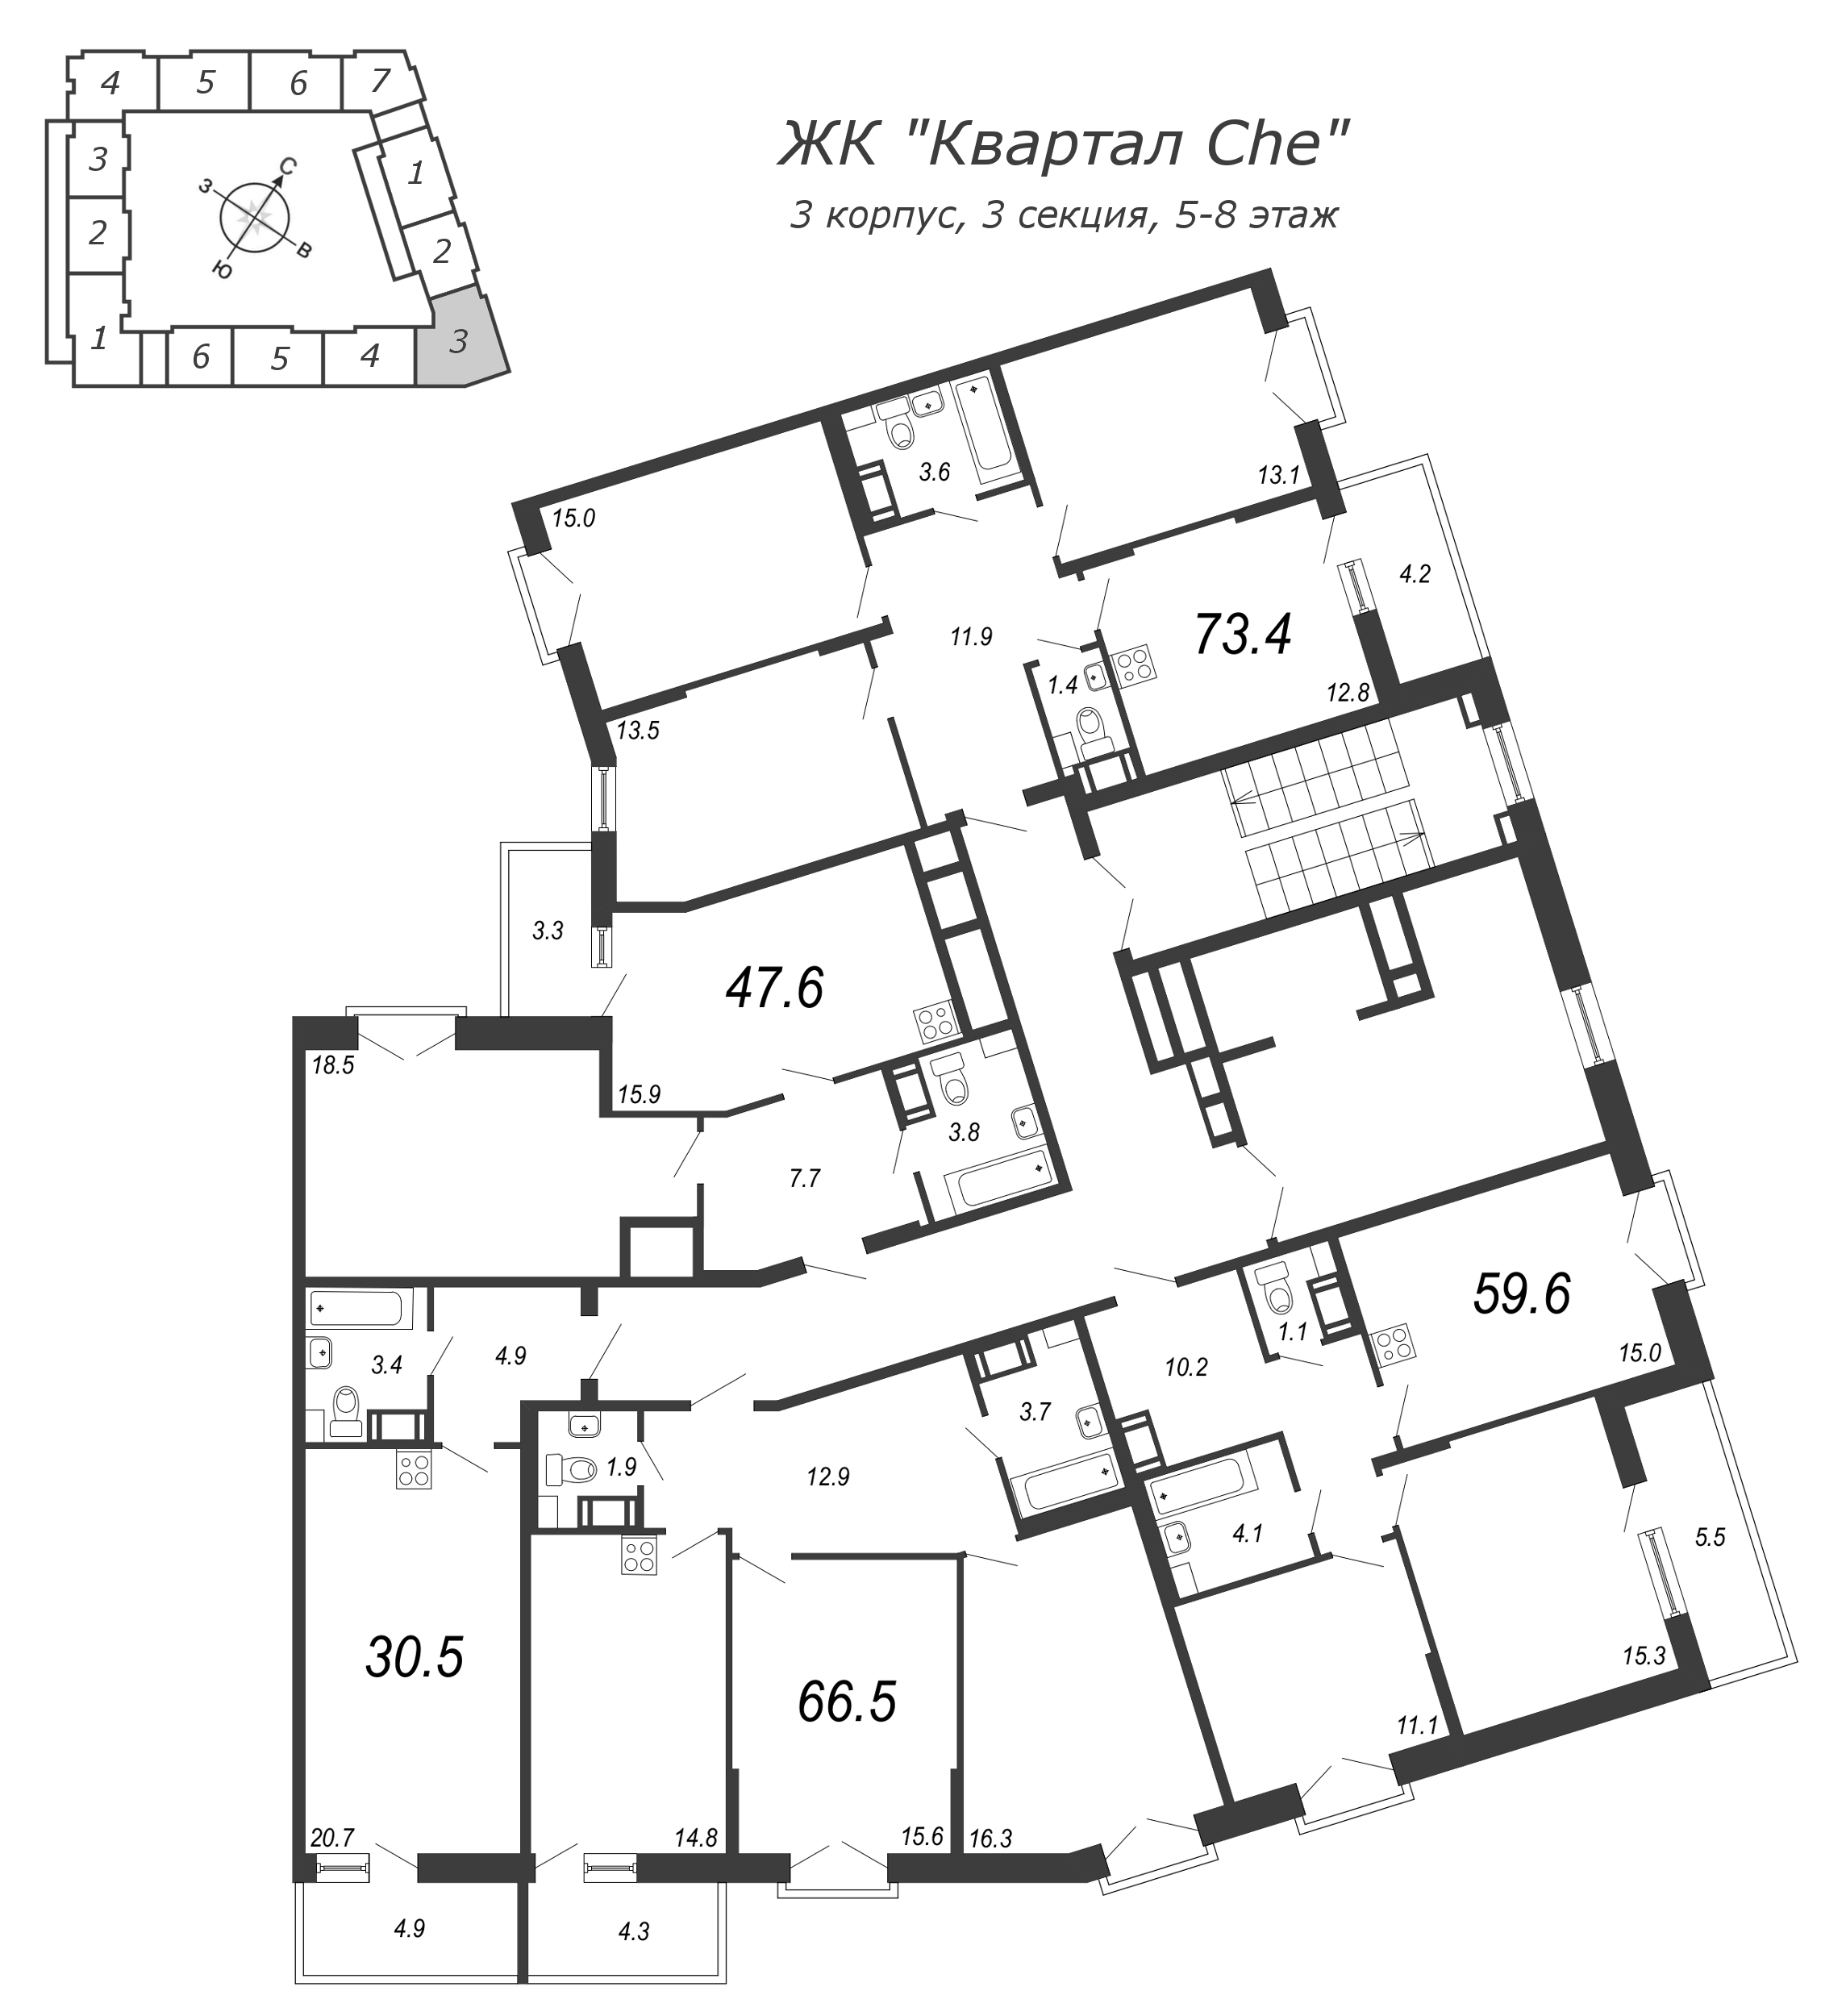 Квартира-студия, 31.4 м² в ЖК "Квартал Che" - планировка этажа